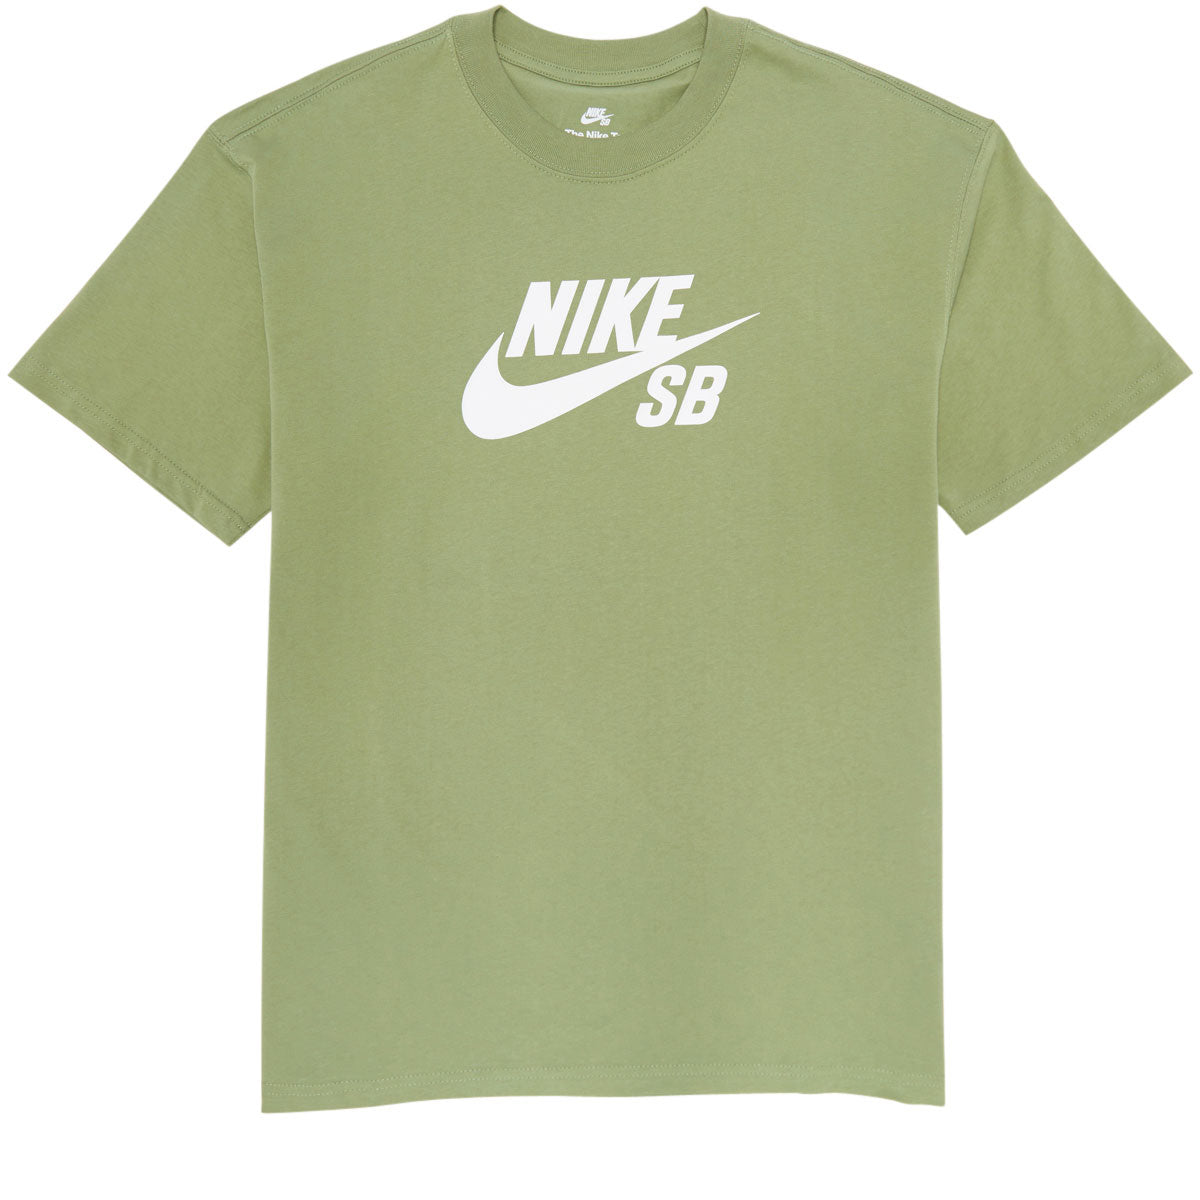 Nike SB Logo T-Shirt - Oil Green image 1